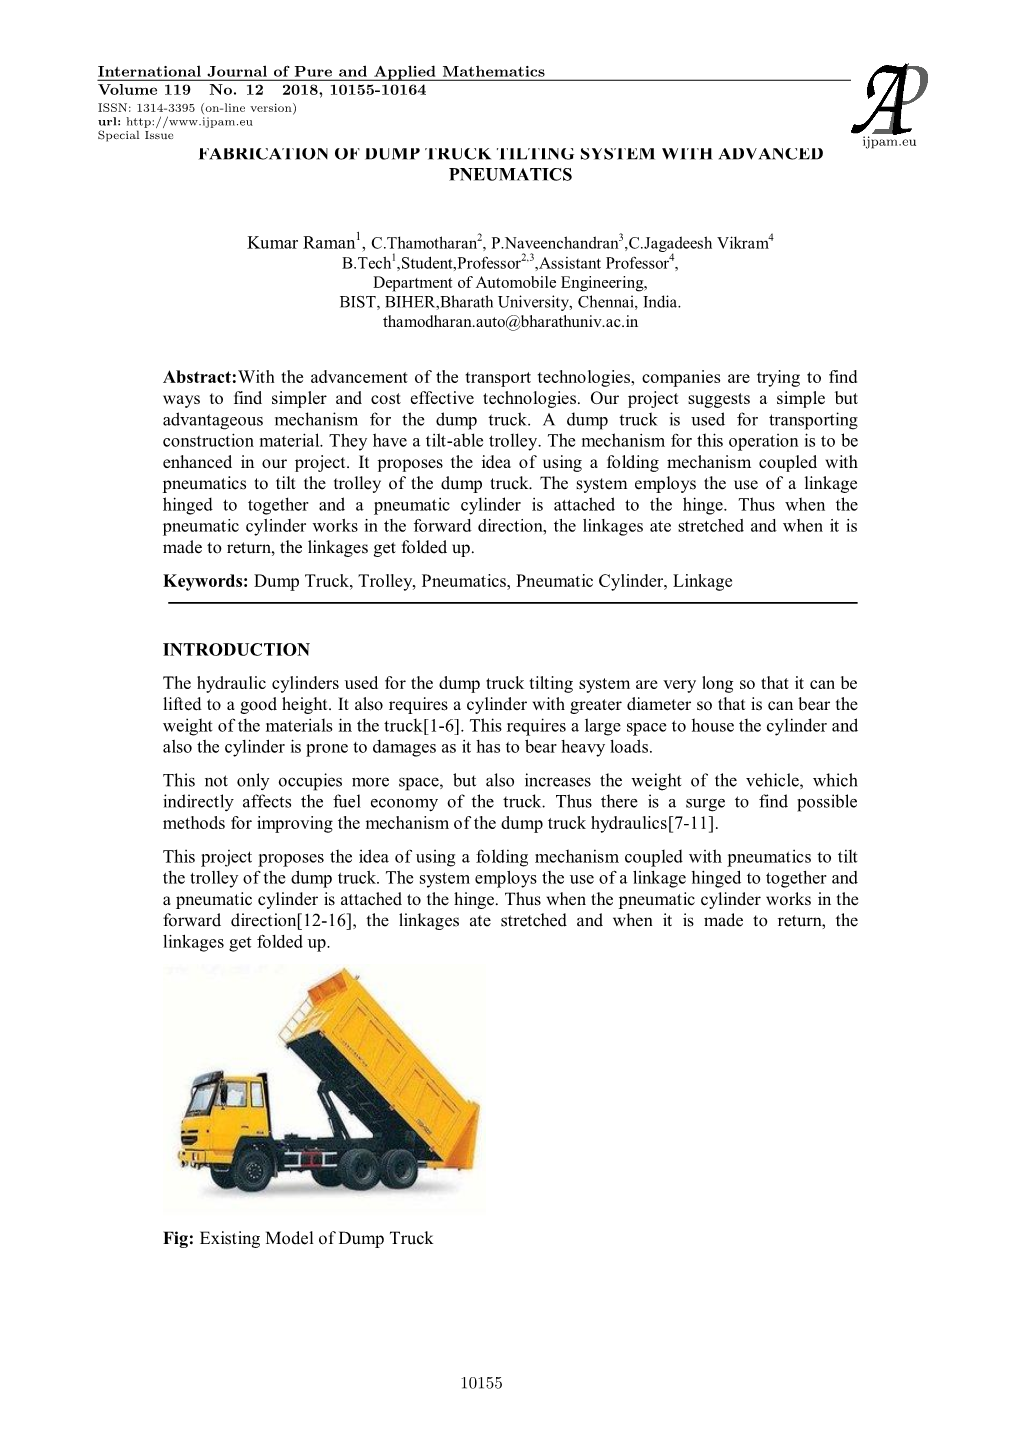 Fabrication of Dump Truck Tilting System with Advanced Pneumatics